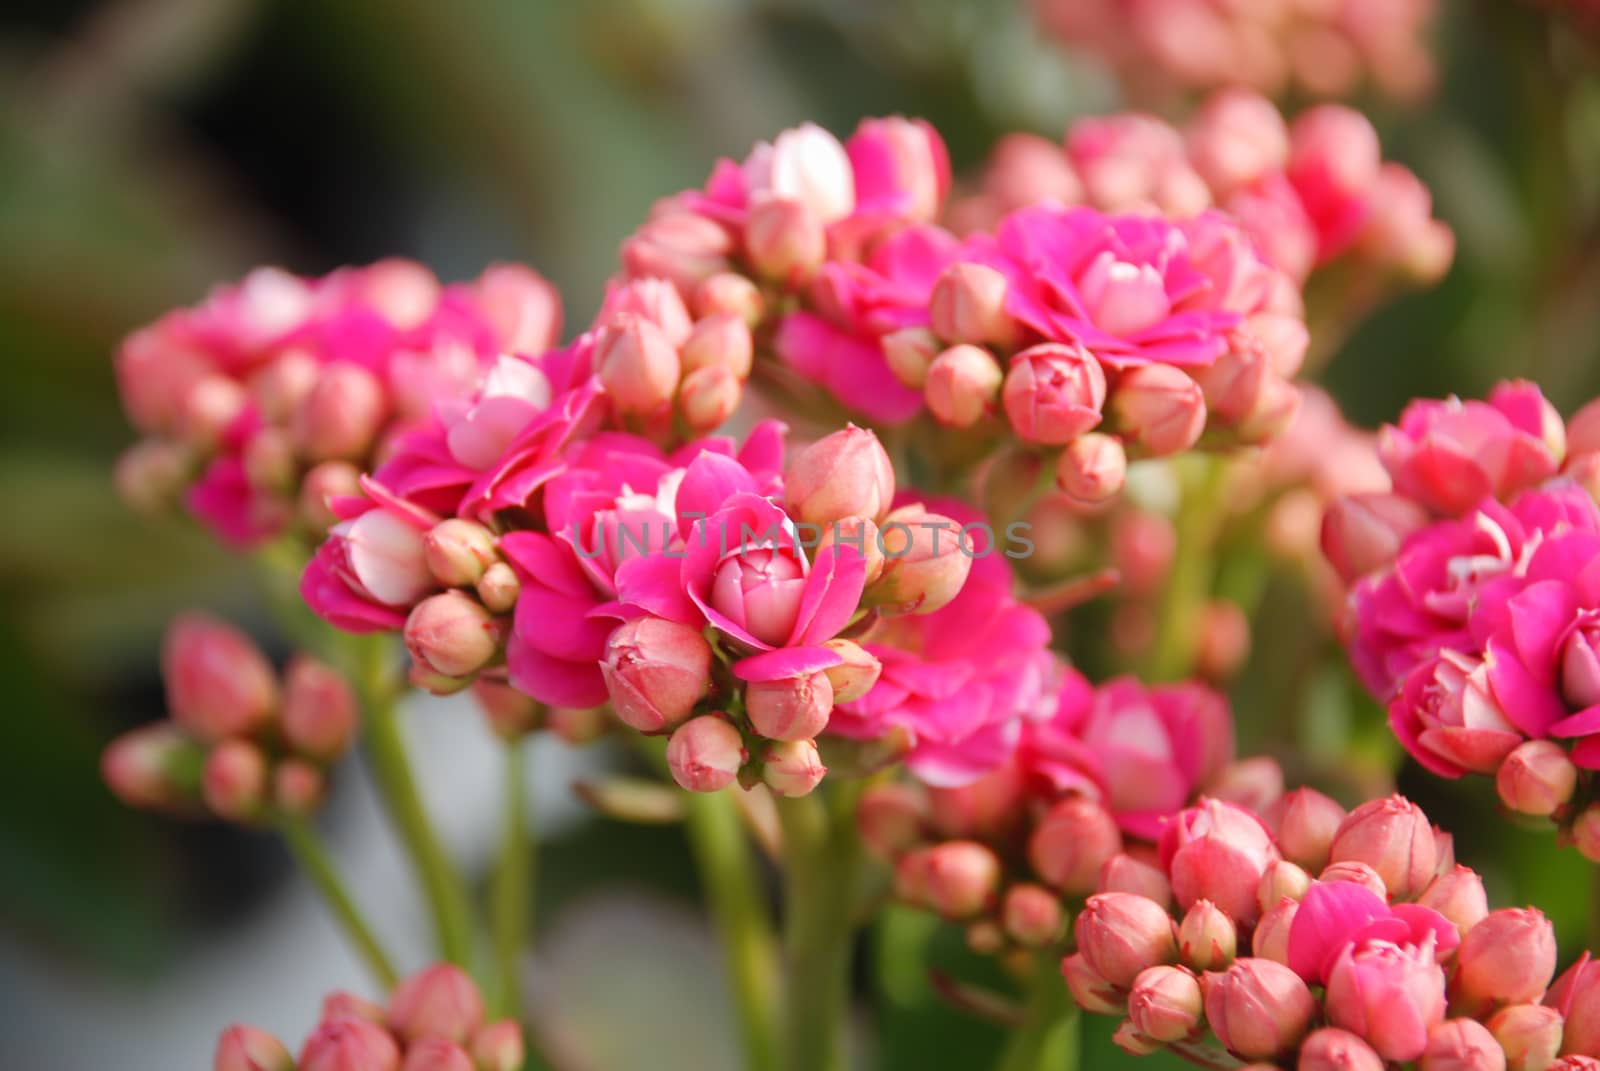 Kalanchoe plant with pink flowers, Kalanchoe blossfeldiana, potted Kalanchoe